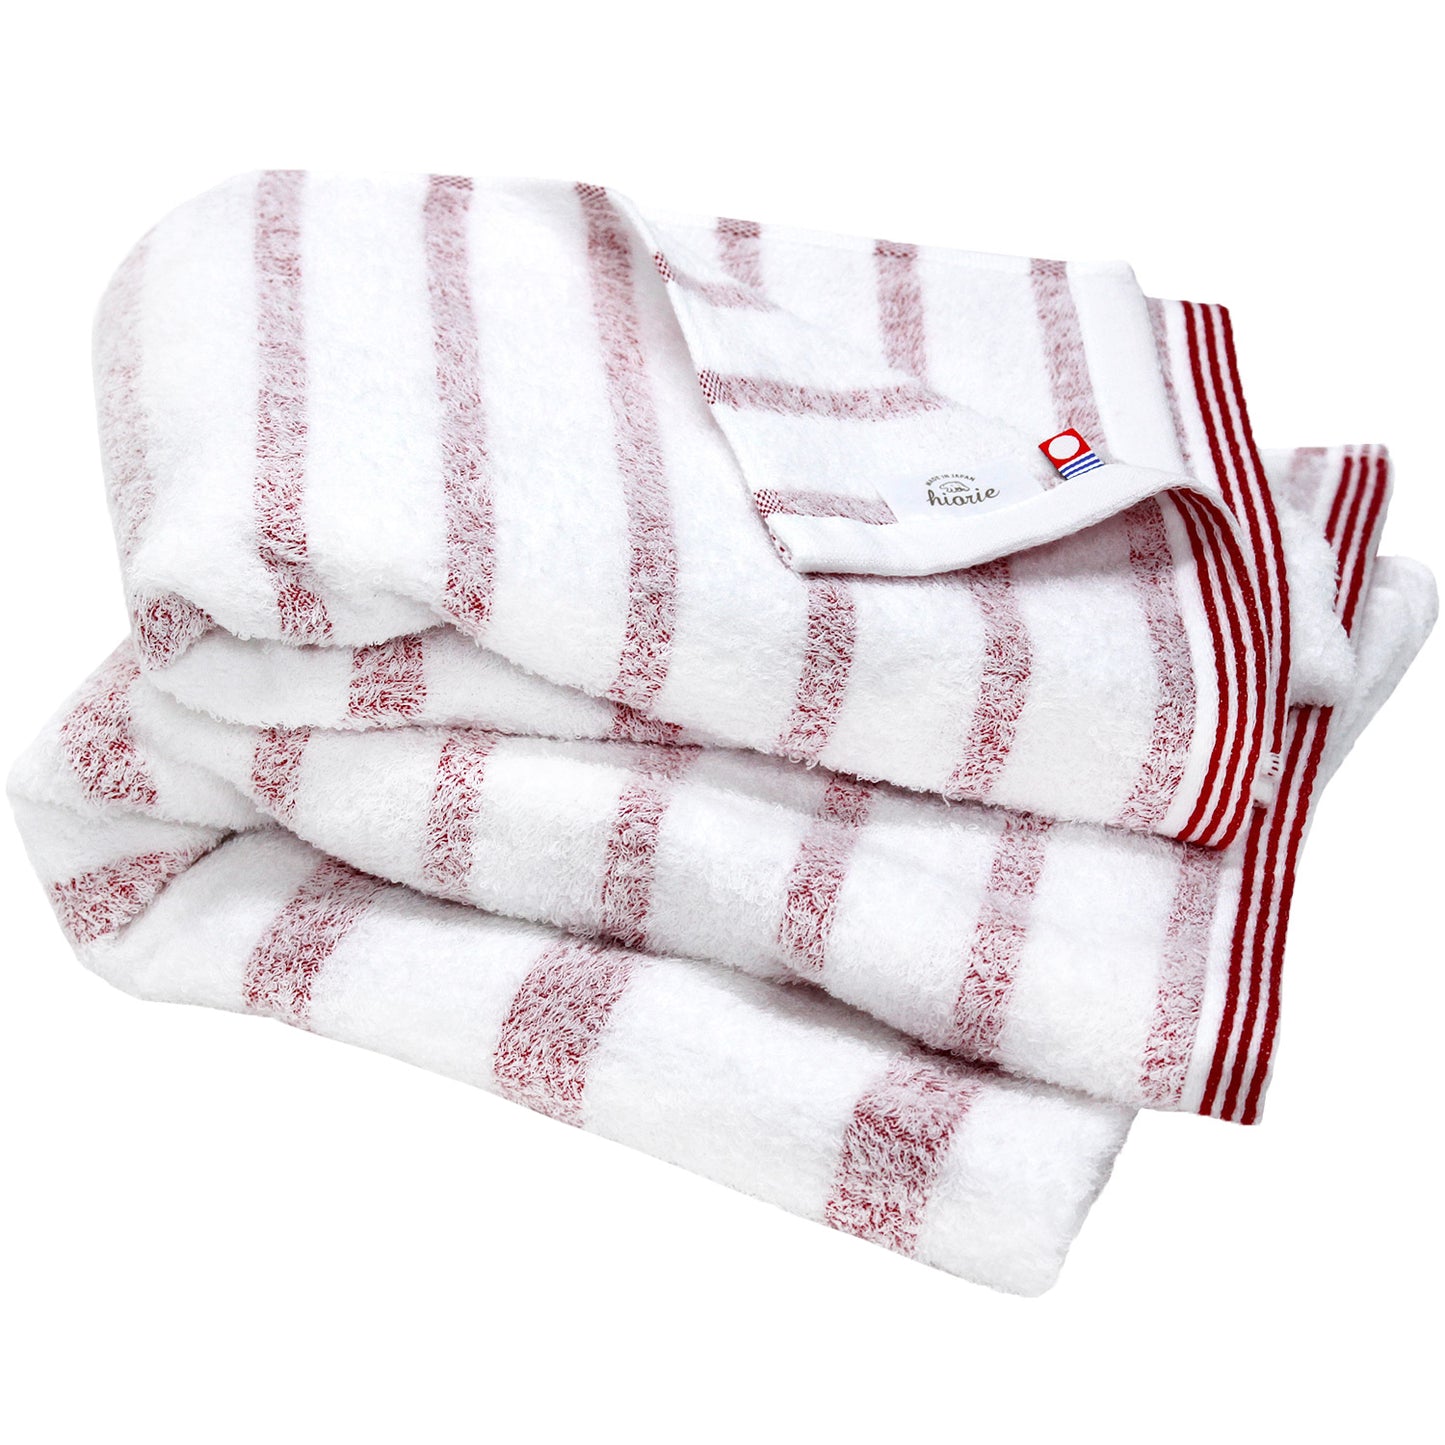 Hiorie Imabari Mist Border Fast Drying Bath Towel 2 Sheets 100% cotton Japan